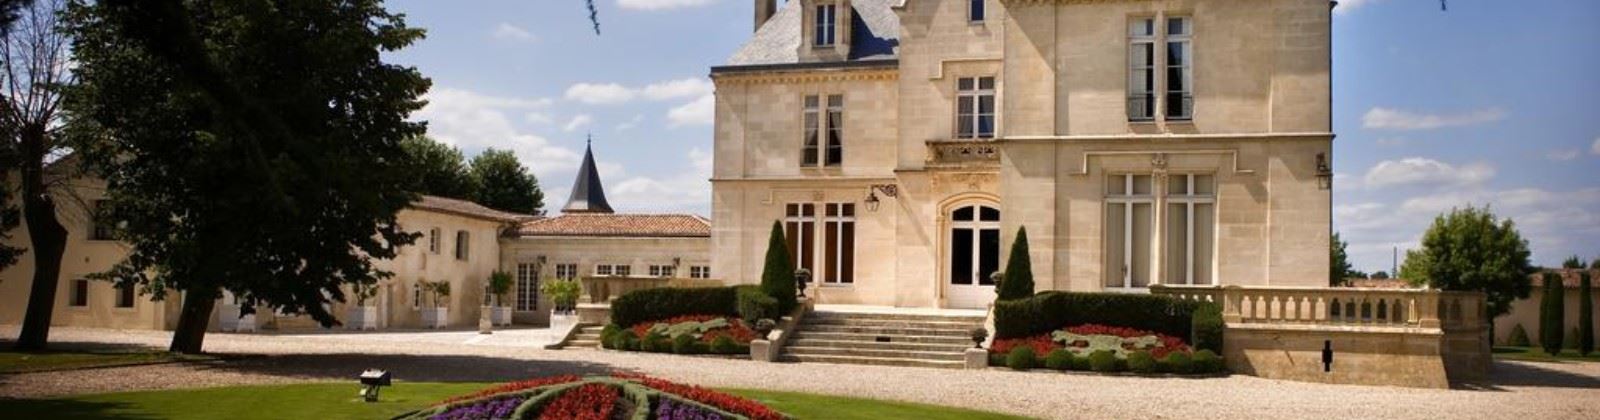 chateau pape clement olevene hotel restaurant reunion booking events 